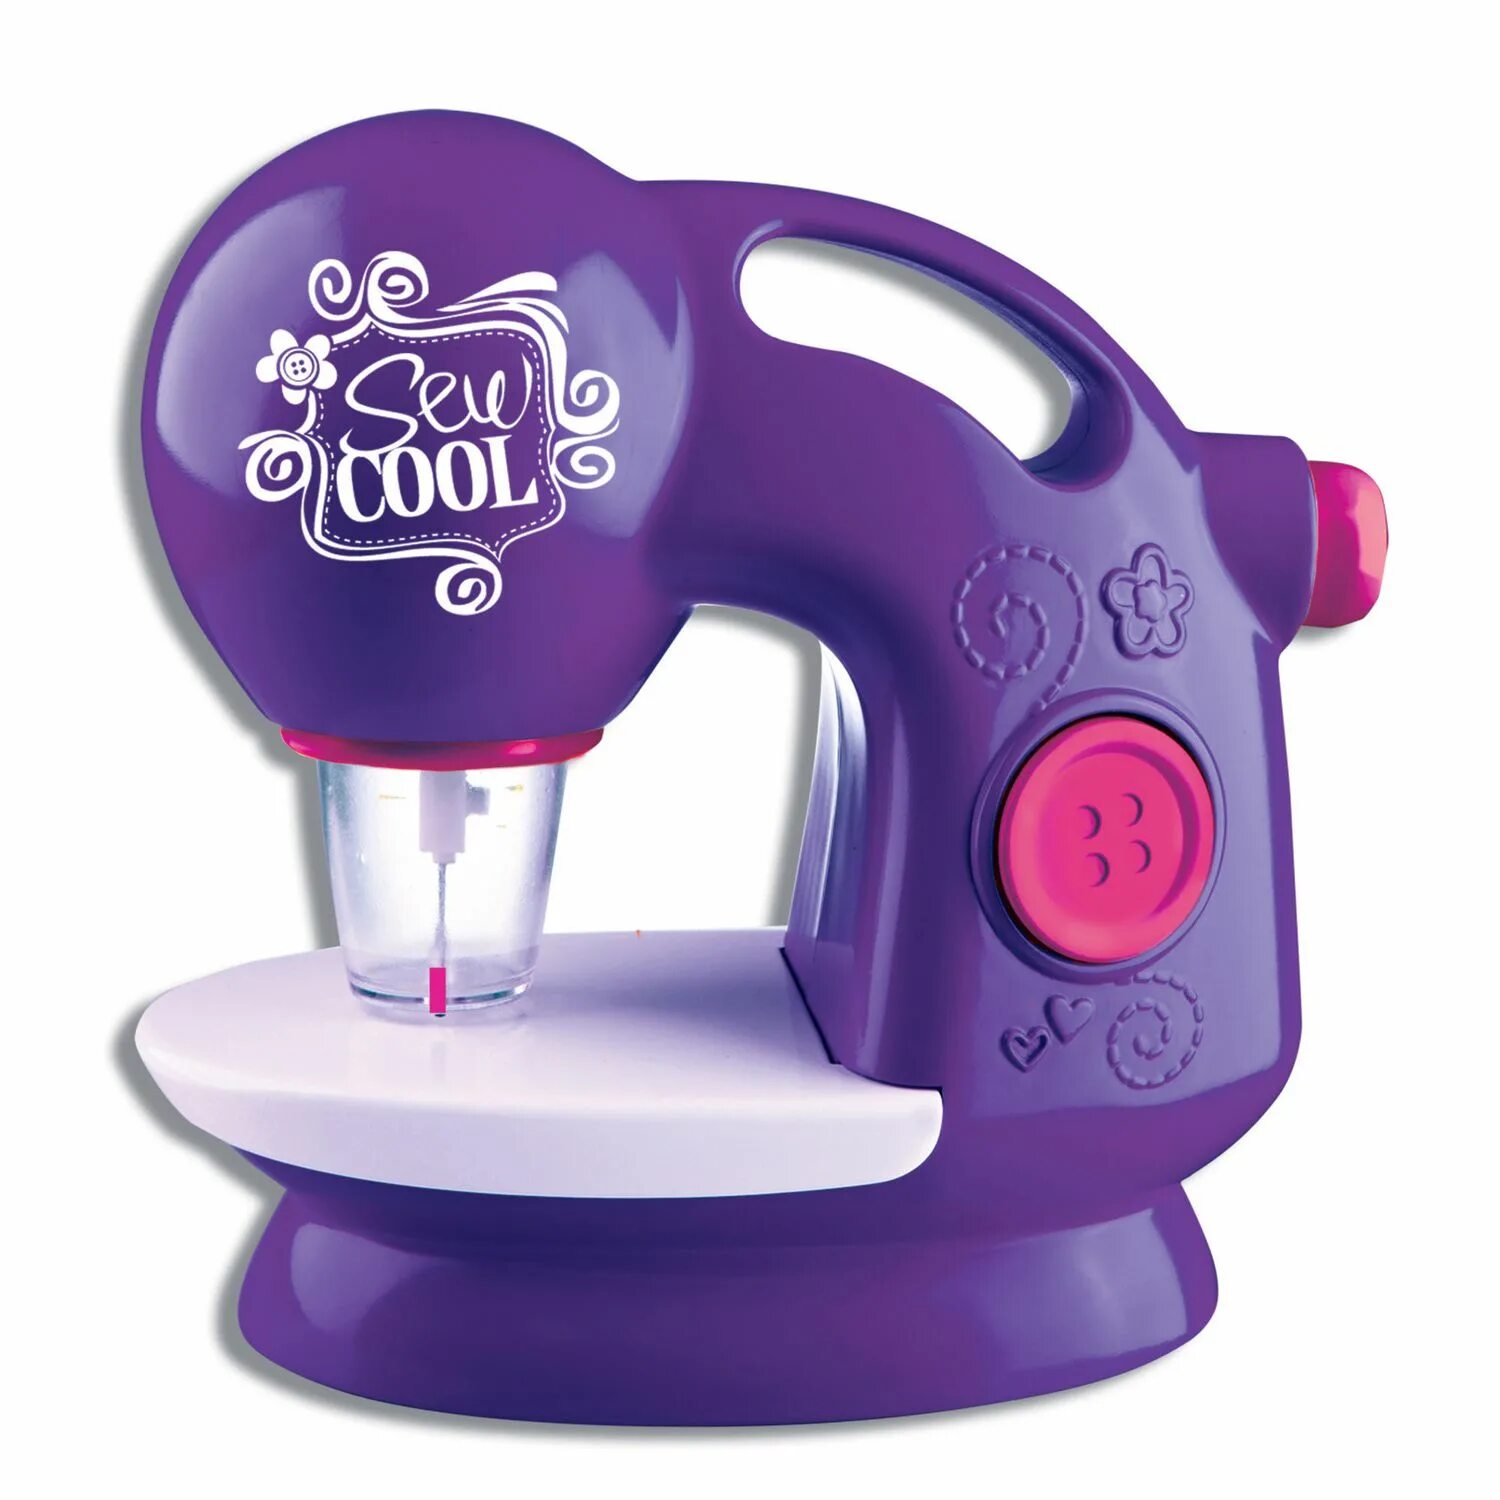 Швейная машина Sew cool 56013. Швейная машина фиолетовая. Шаейная детская машинка Sew c ool 56013. Cool maker Fashion Studio швейная машинка.